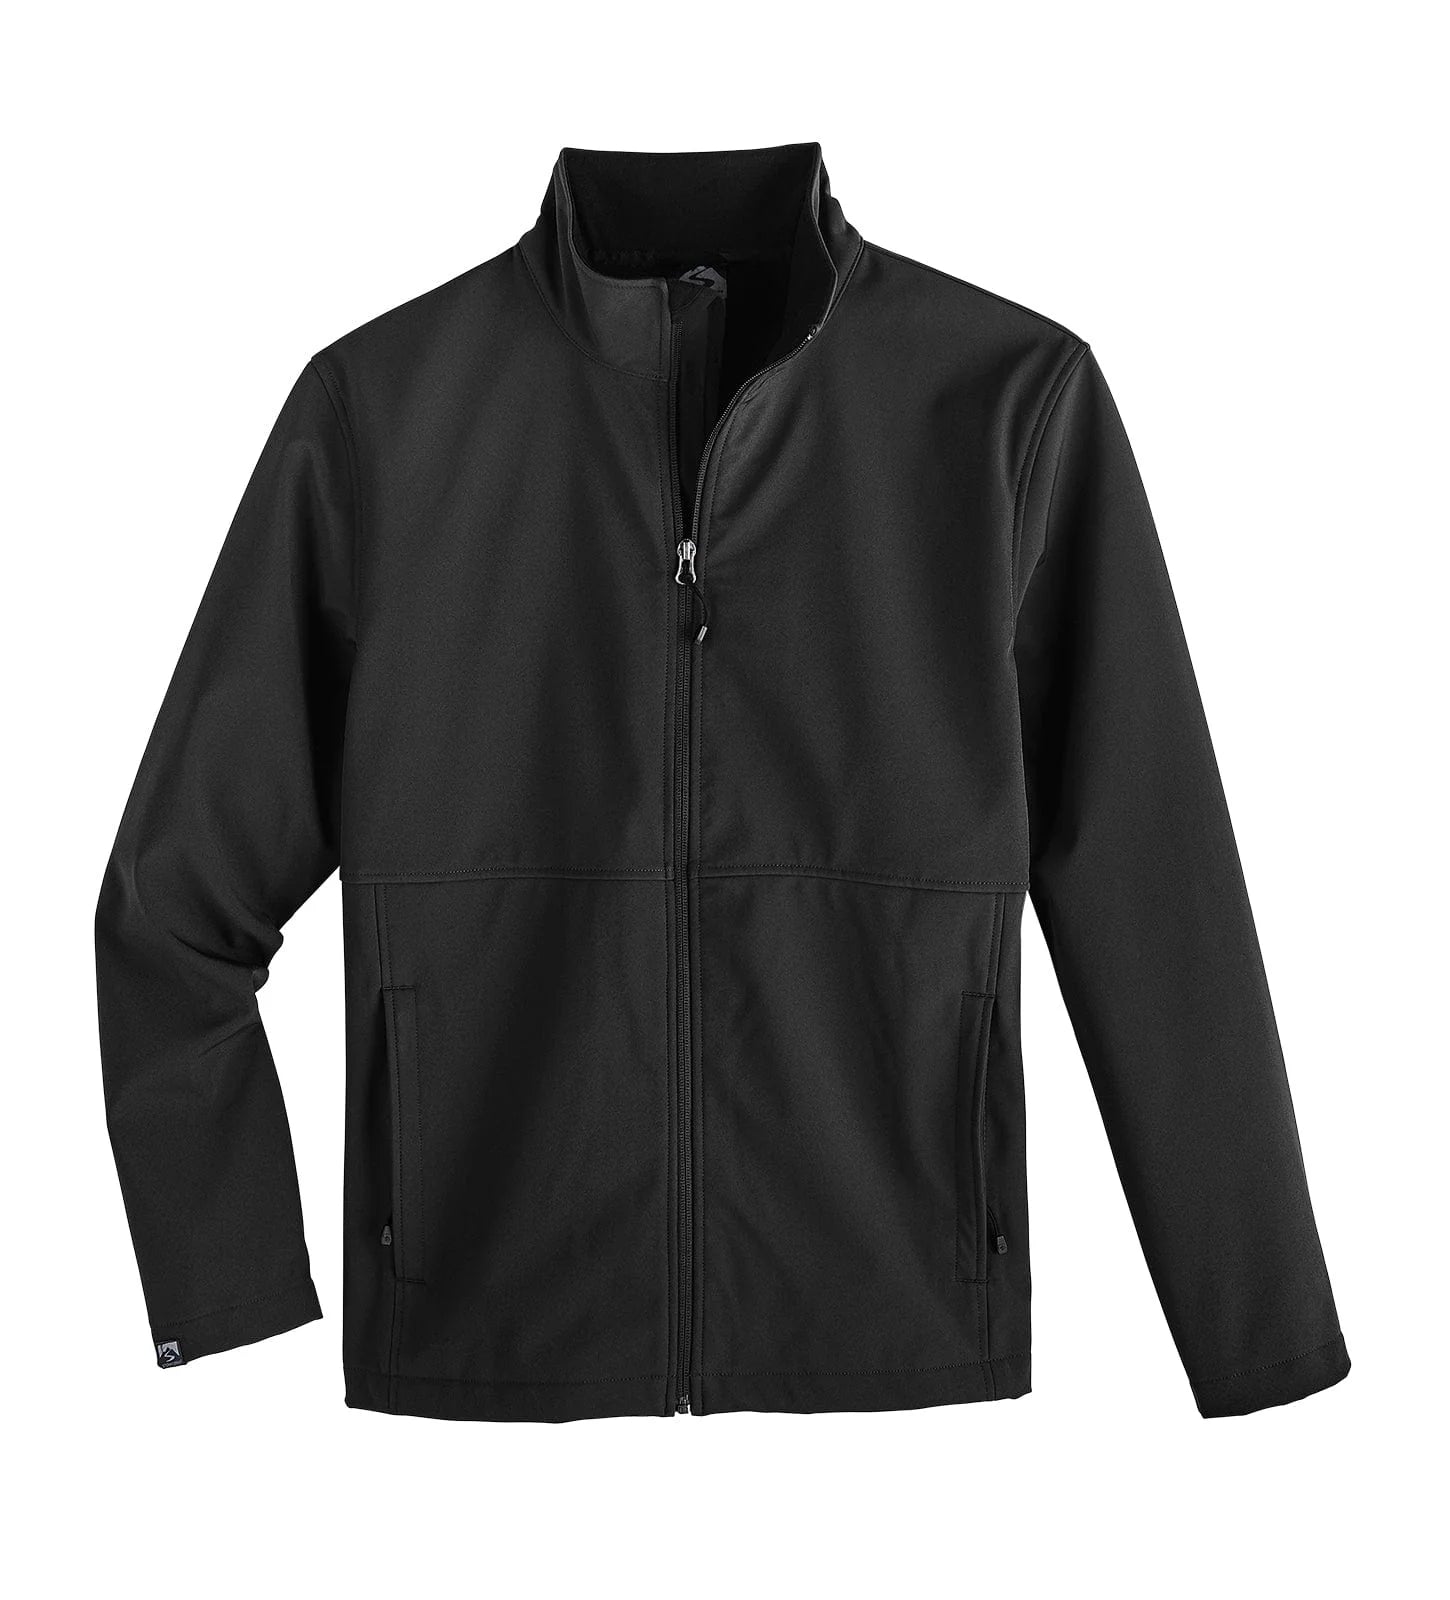 Customizable Storm Creek® Men's Trailblazer Jacket in black.